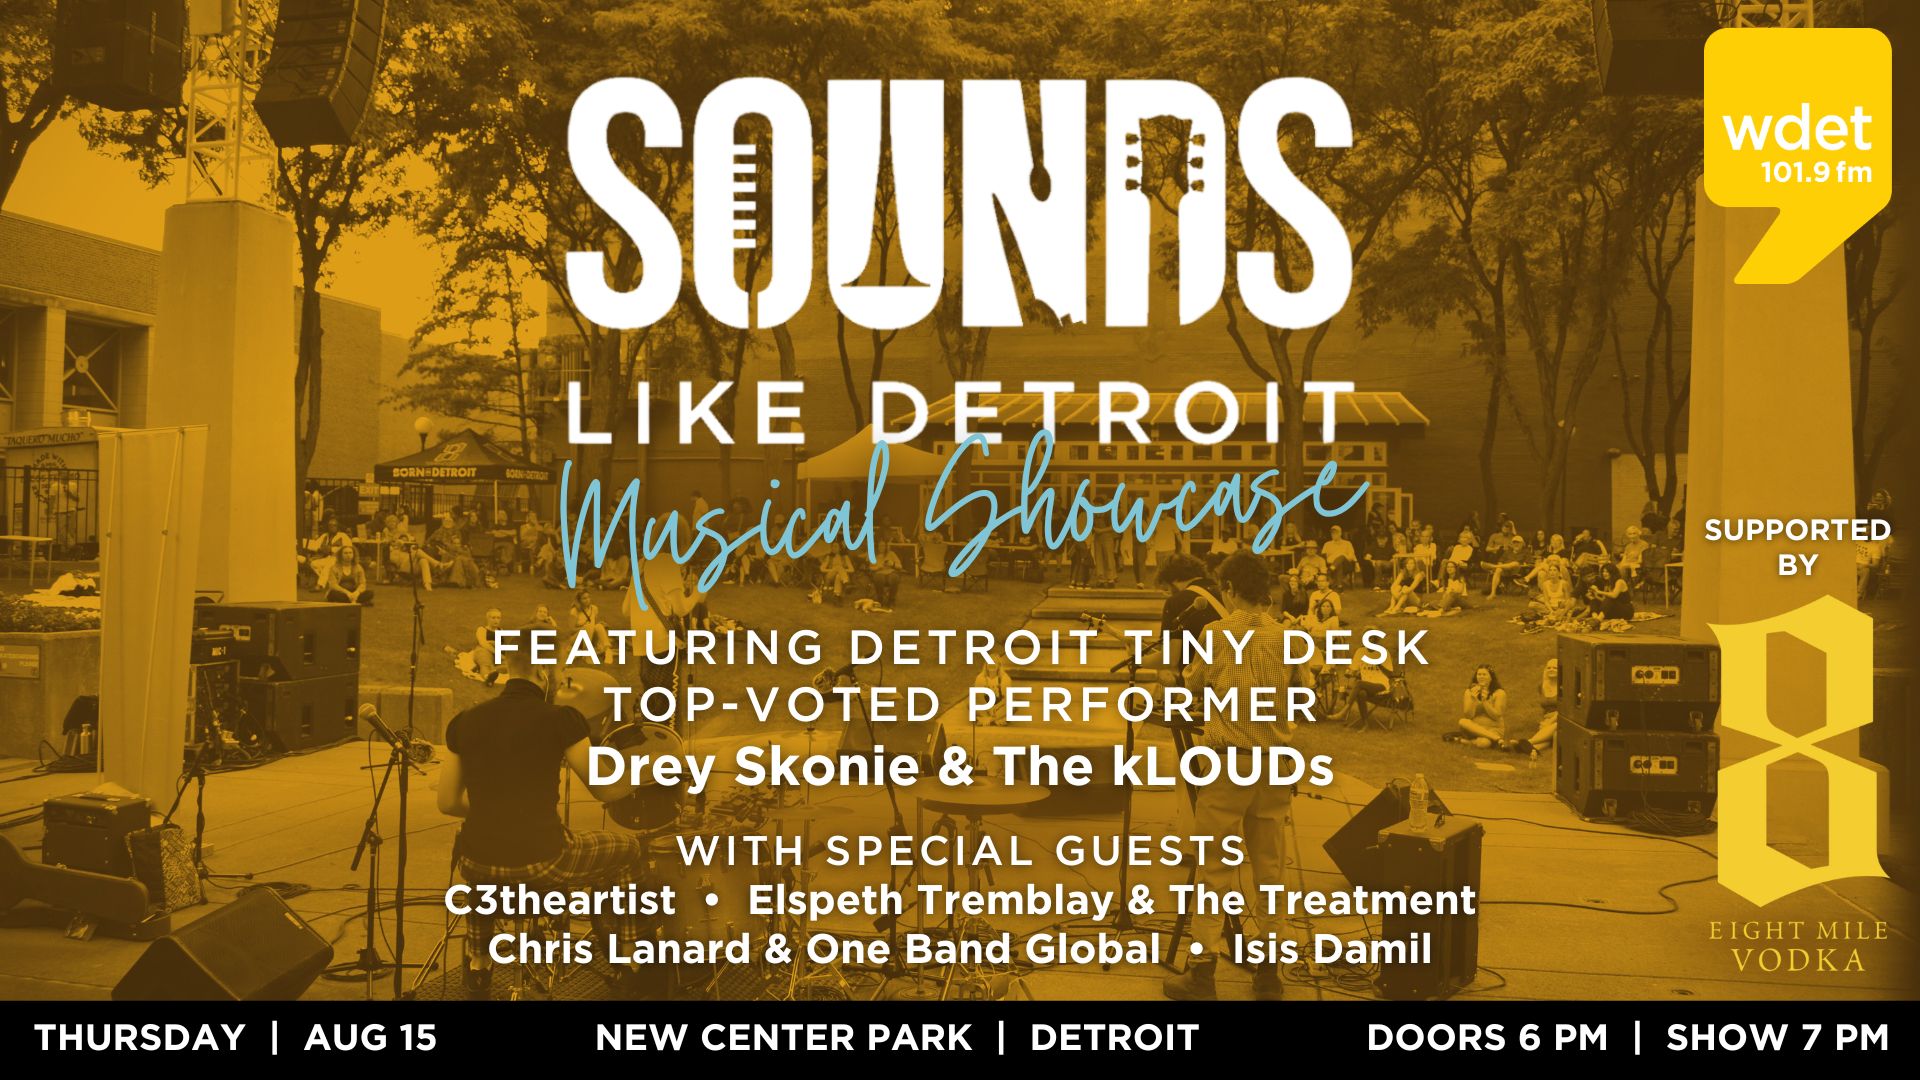 Sounds Like Detroit musical showcase, August 15 at New Center Park